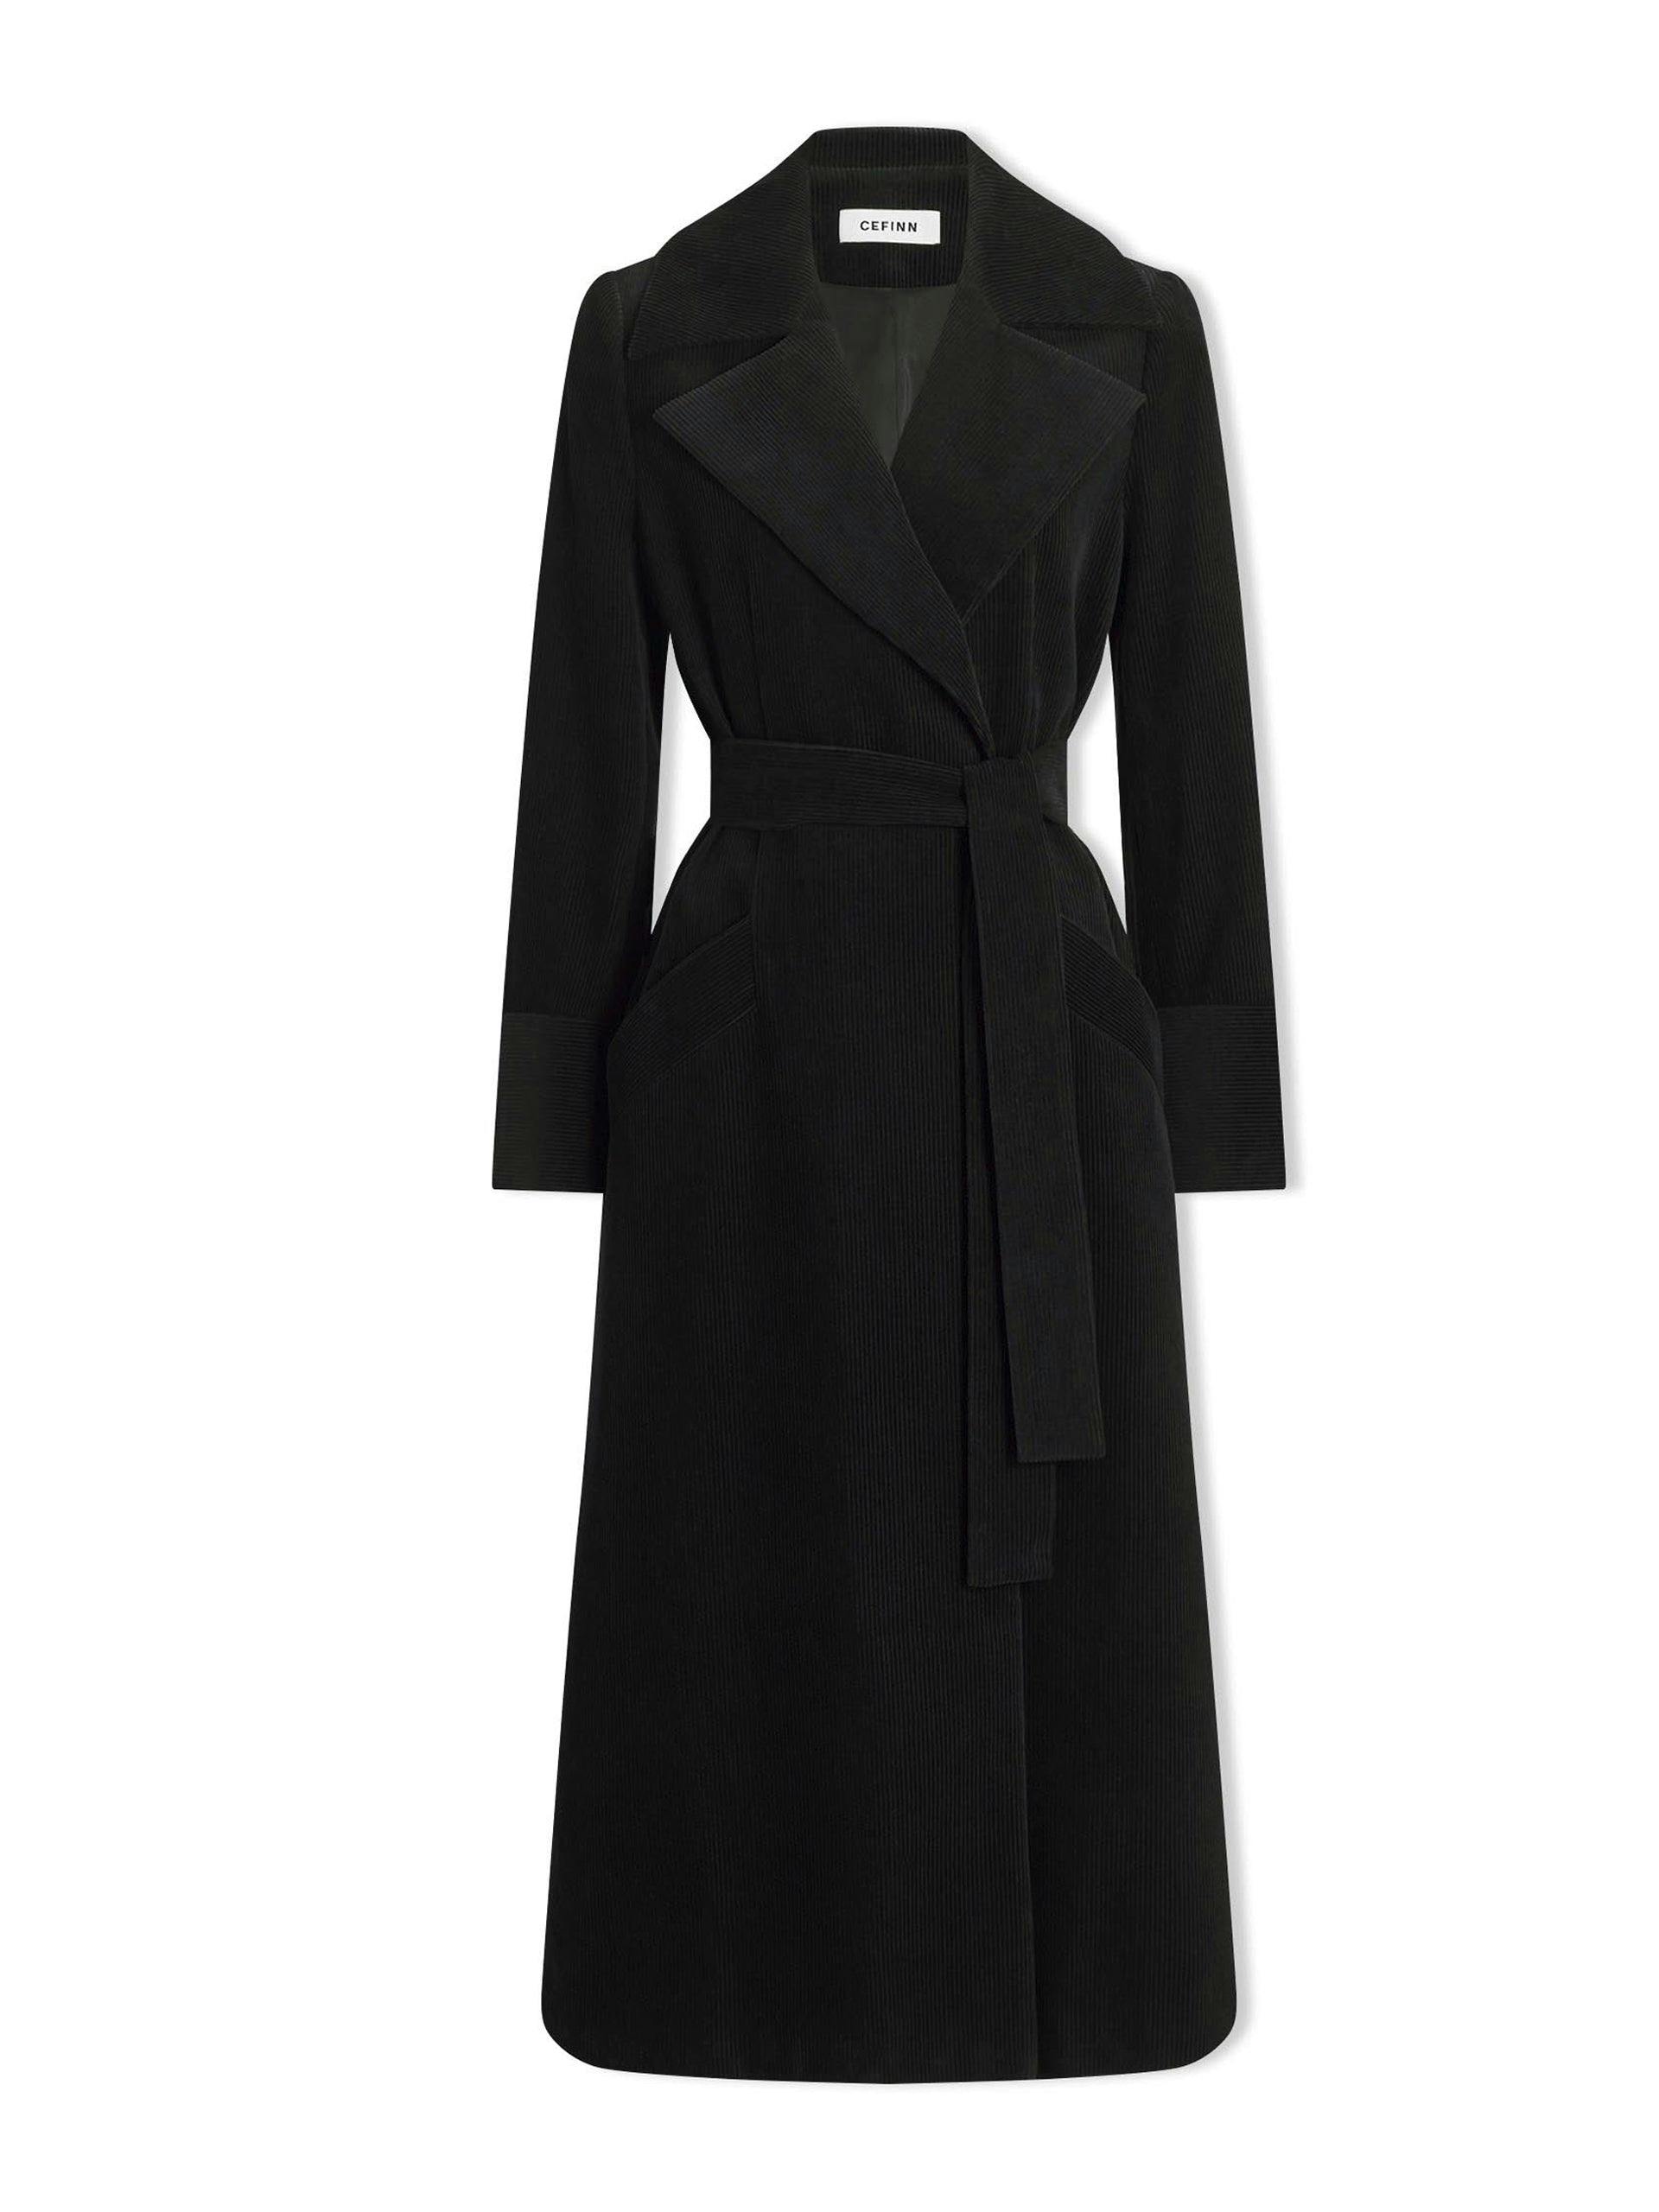 Black corduroy Roxanne coat